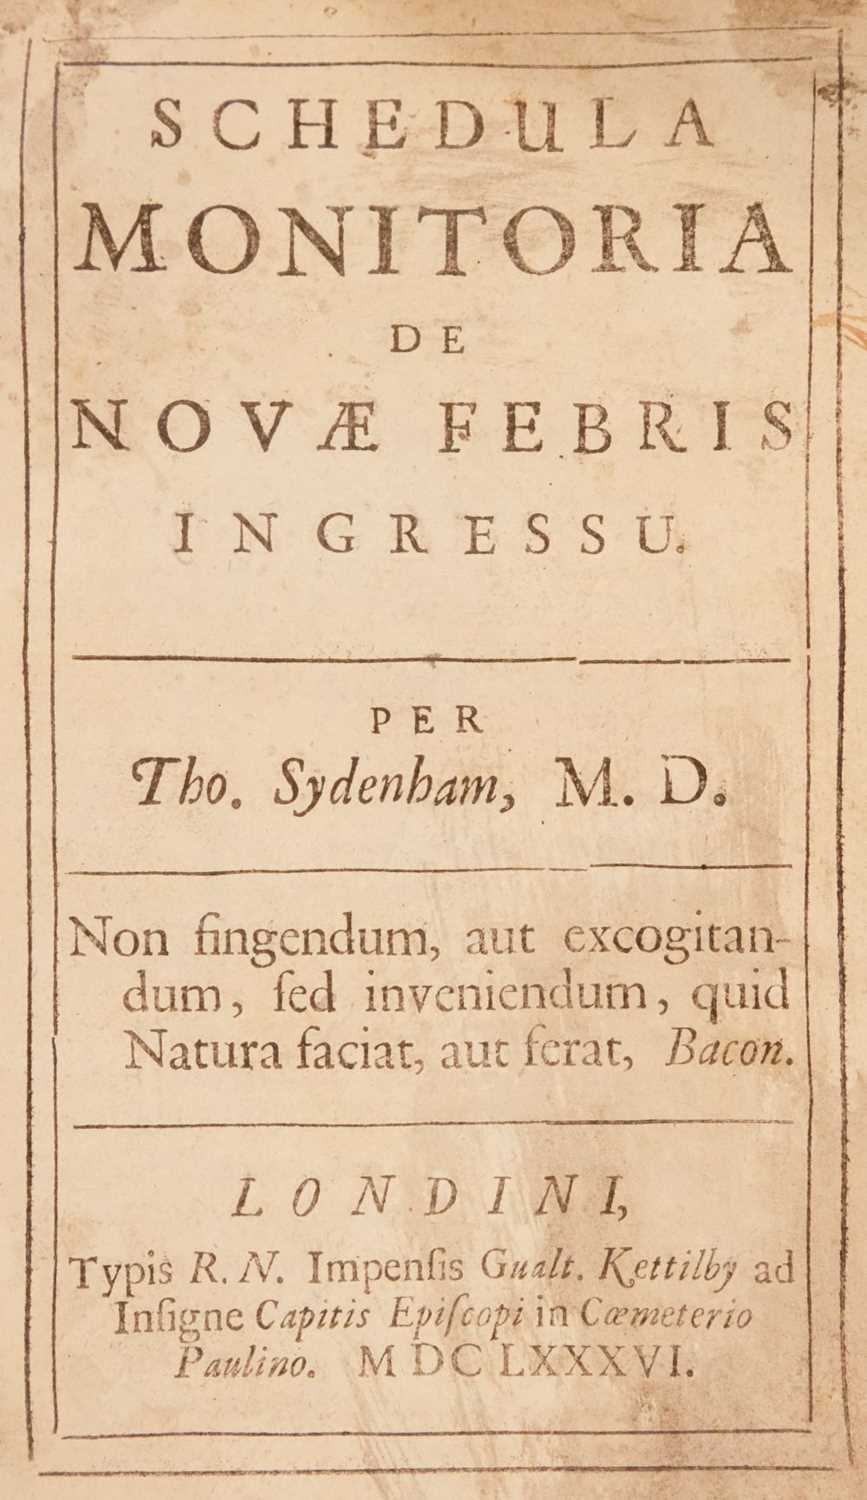 Lot 116 - Sydenham (Thomas). Schedula Monitoria de novae febris ingressu, 1686